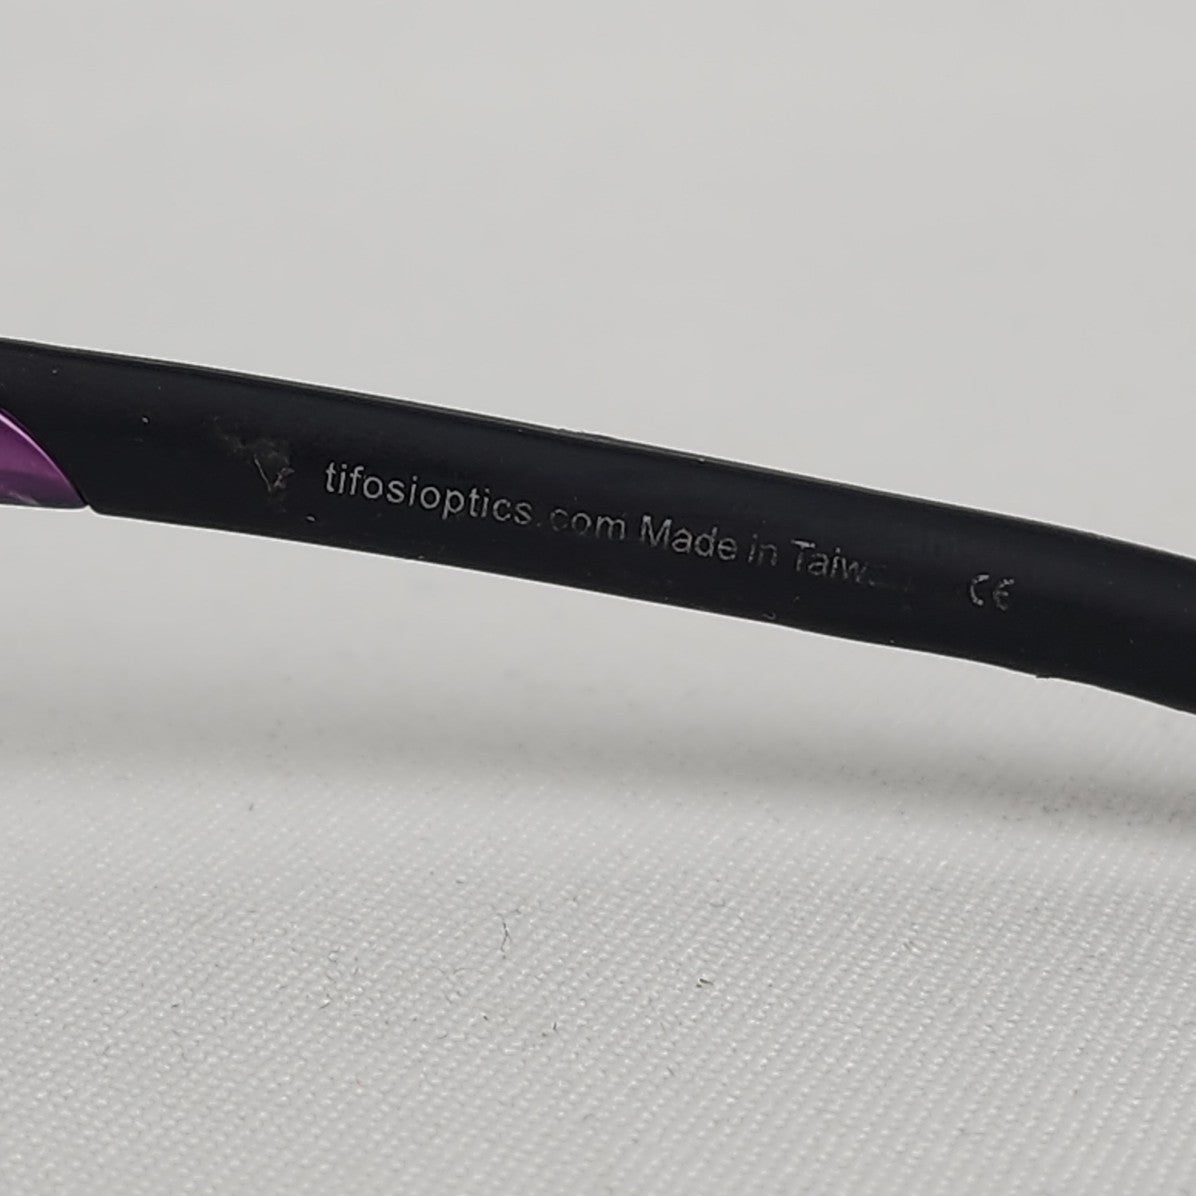 Tifosi Purple & Black ALPE 2.0 Sunglasses